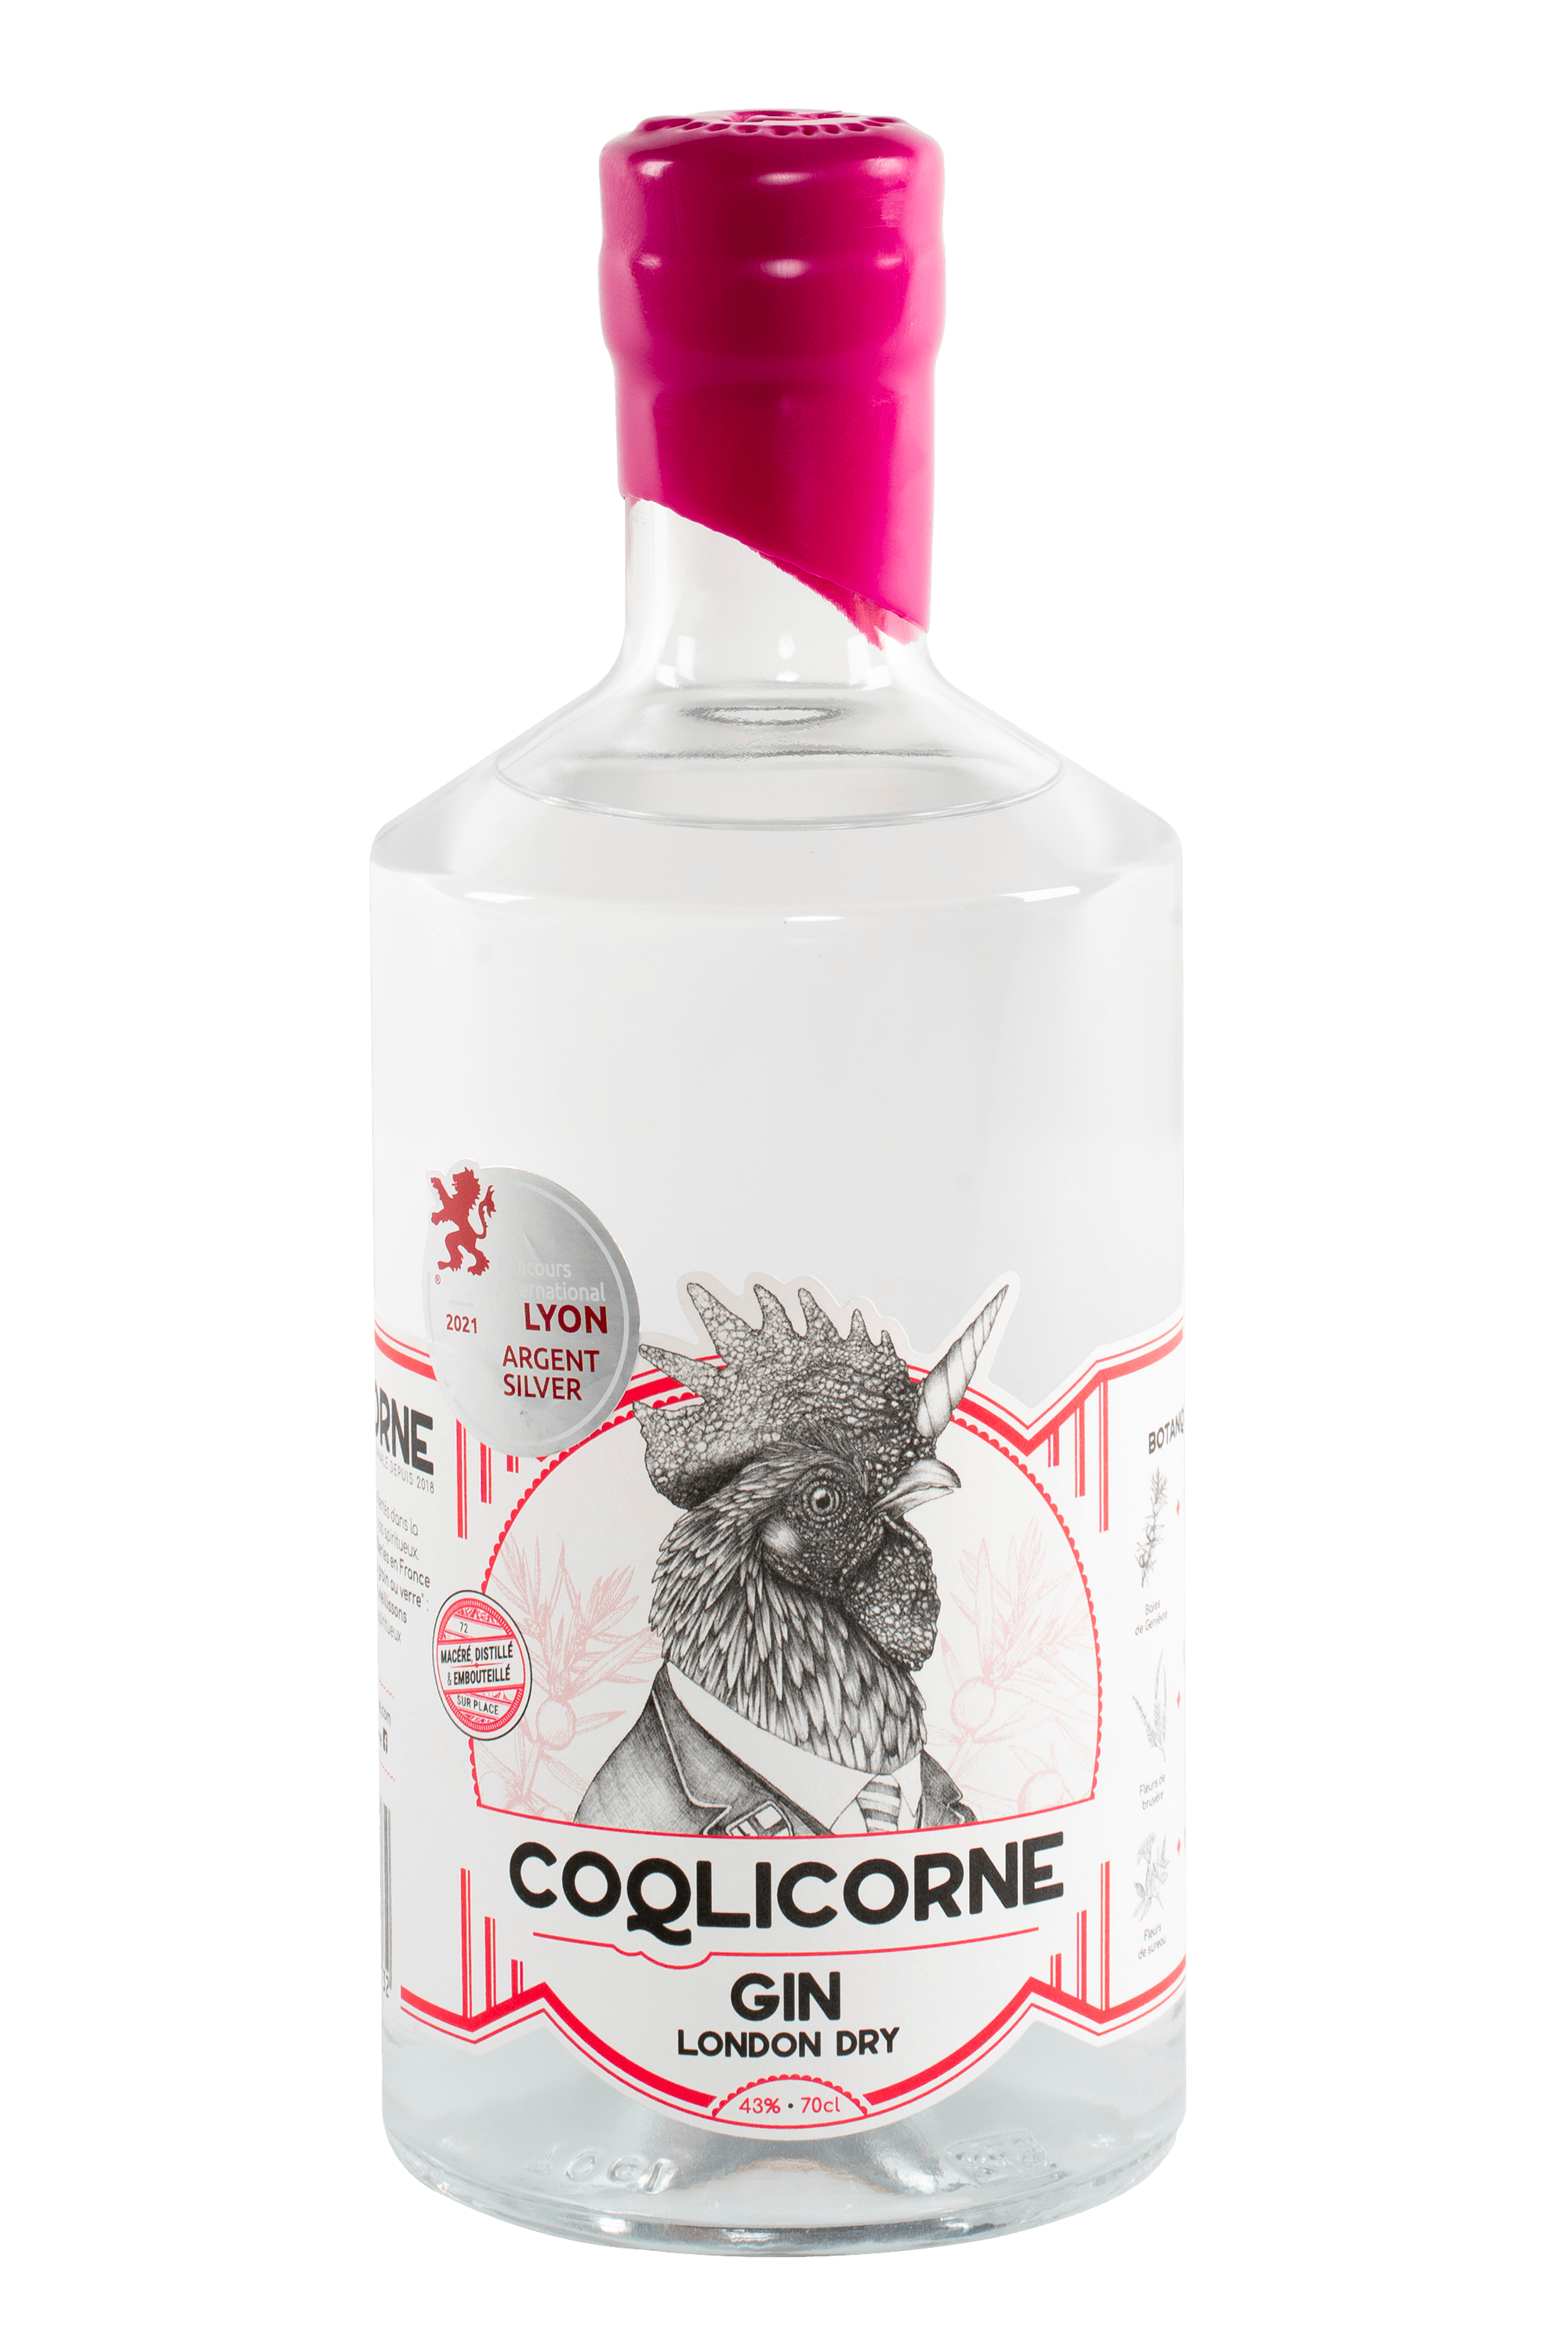 Le London Dry, le classique de la distillerie Coqlicorne